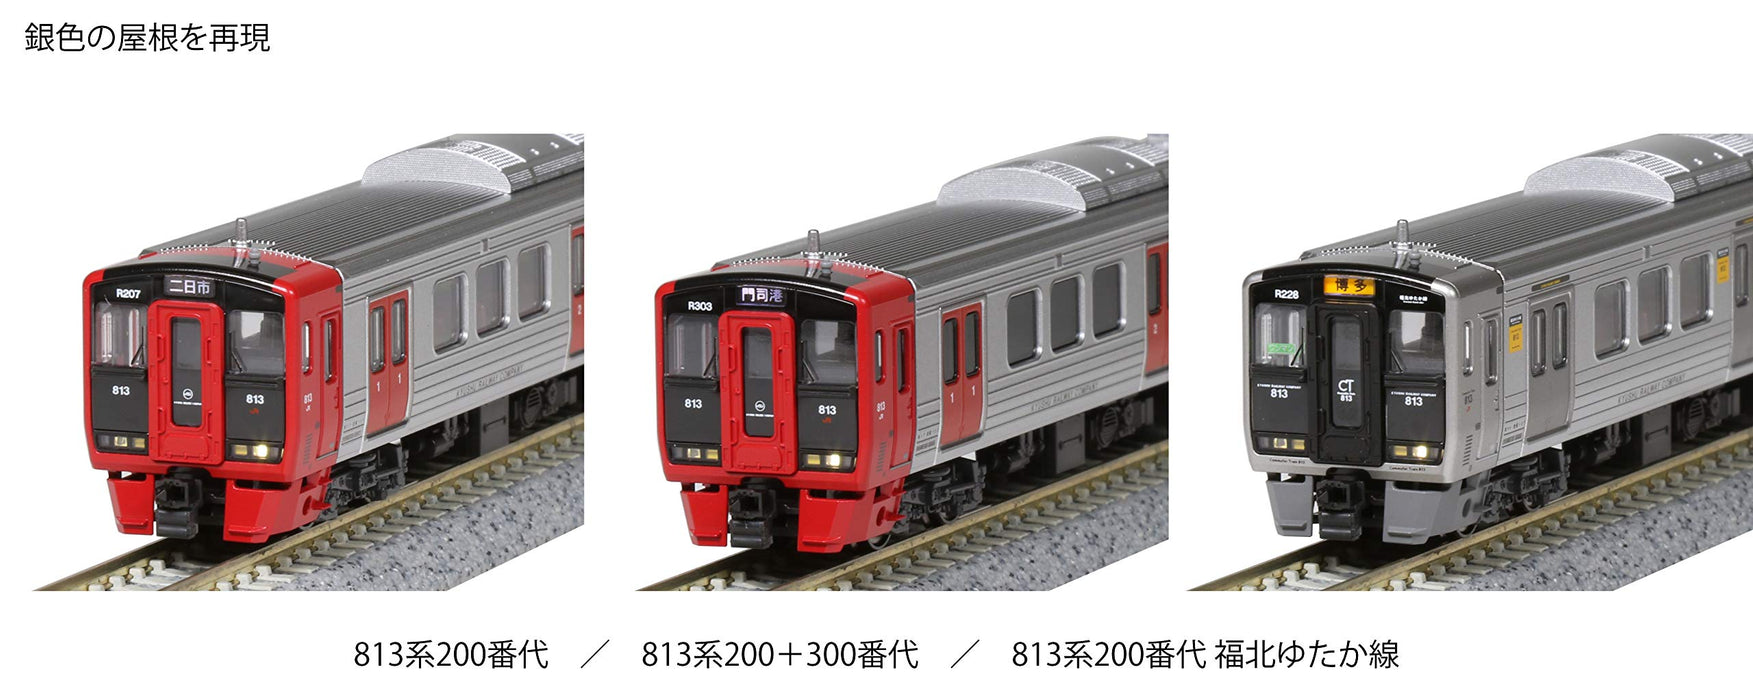 Kato N Gauge 813 Series Railway Model Train 3-Car Set Fukuhoku Yutaka Line